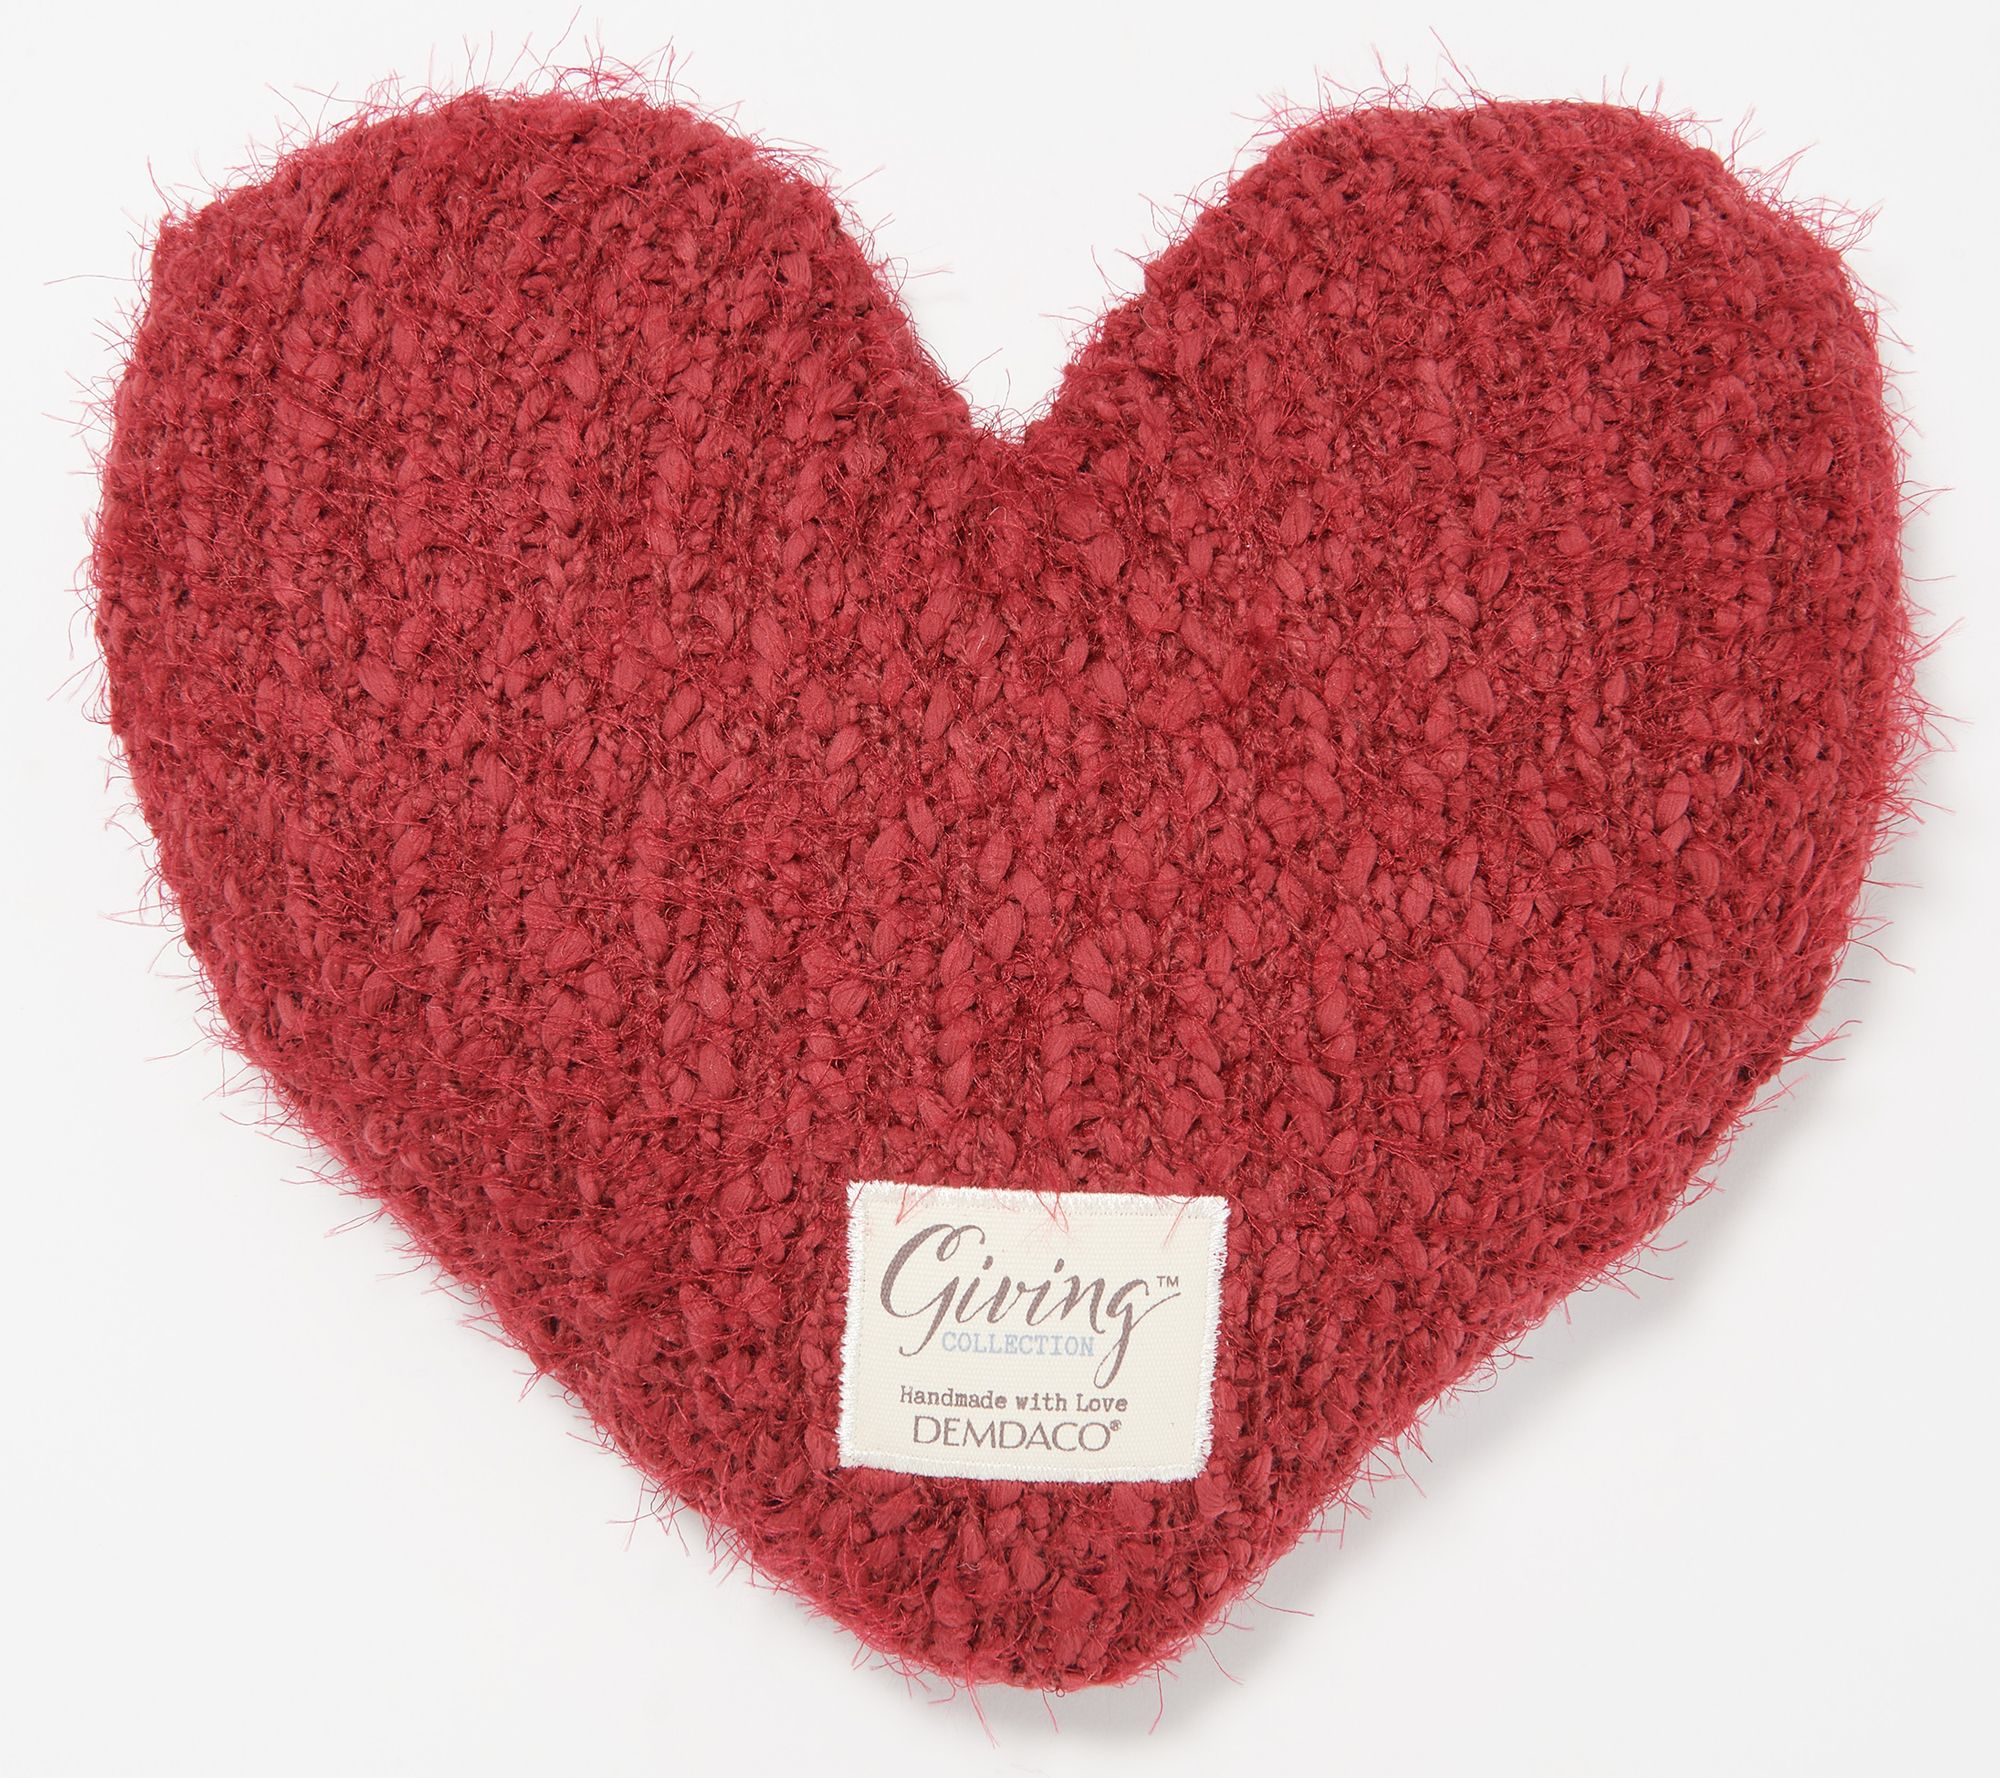 Hirigin Women's Plush Love Shoulder Hairy Bag Heart-Shaped Bag Gift, Size: One size, Pink